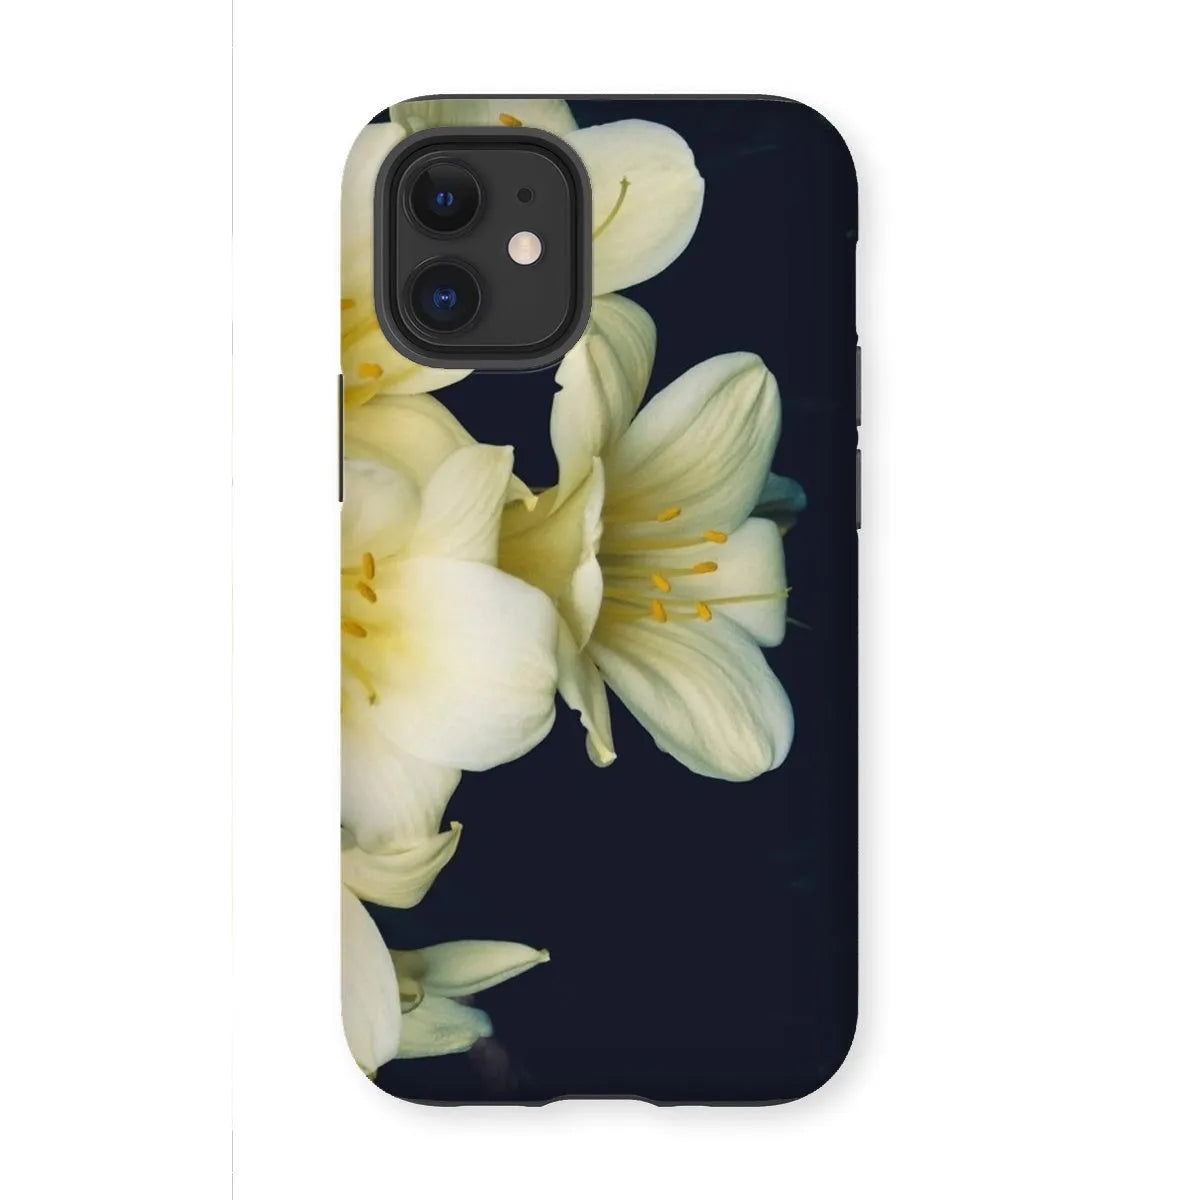 Flower Power Too Tough Phone Case - Iphone 12 Mini / Matte - Mobile Phone Cases - Aesthetic Art